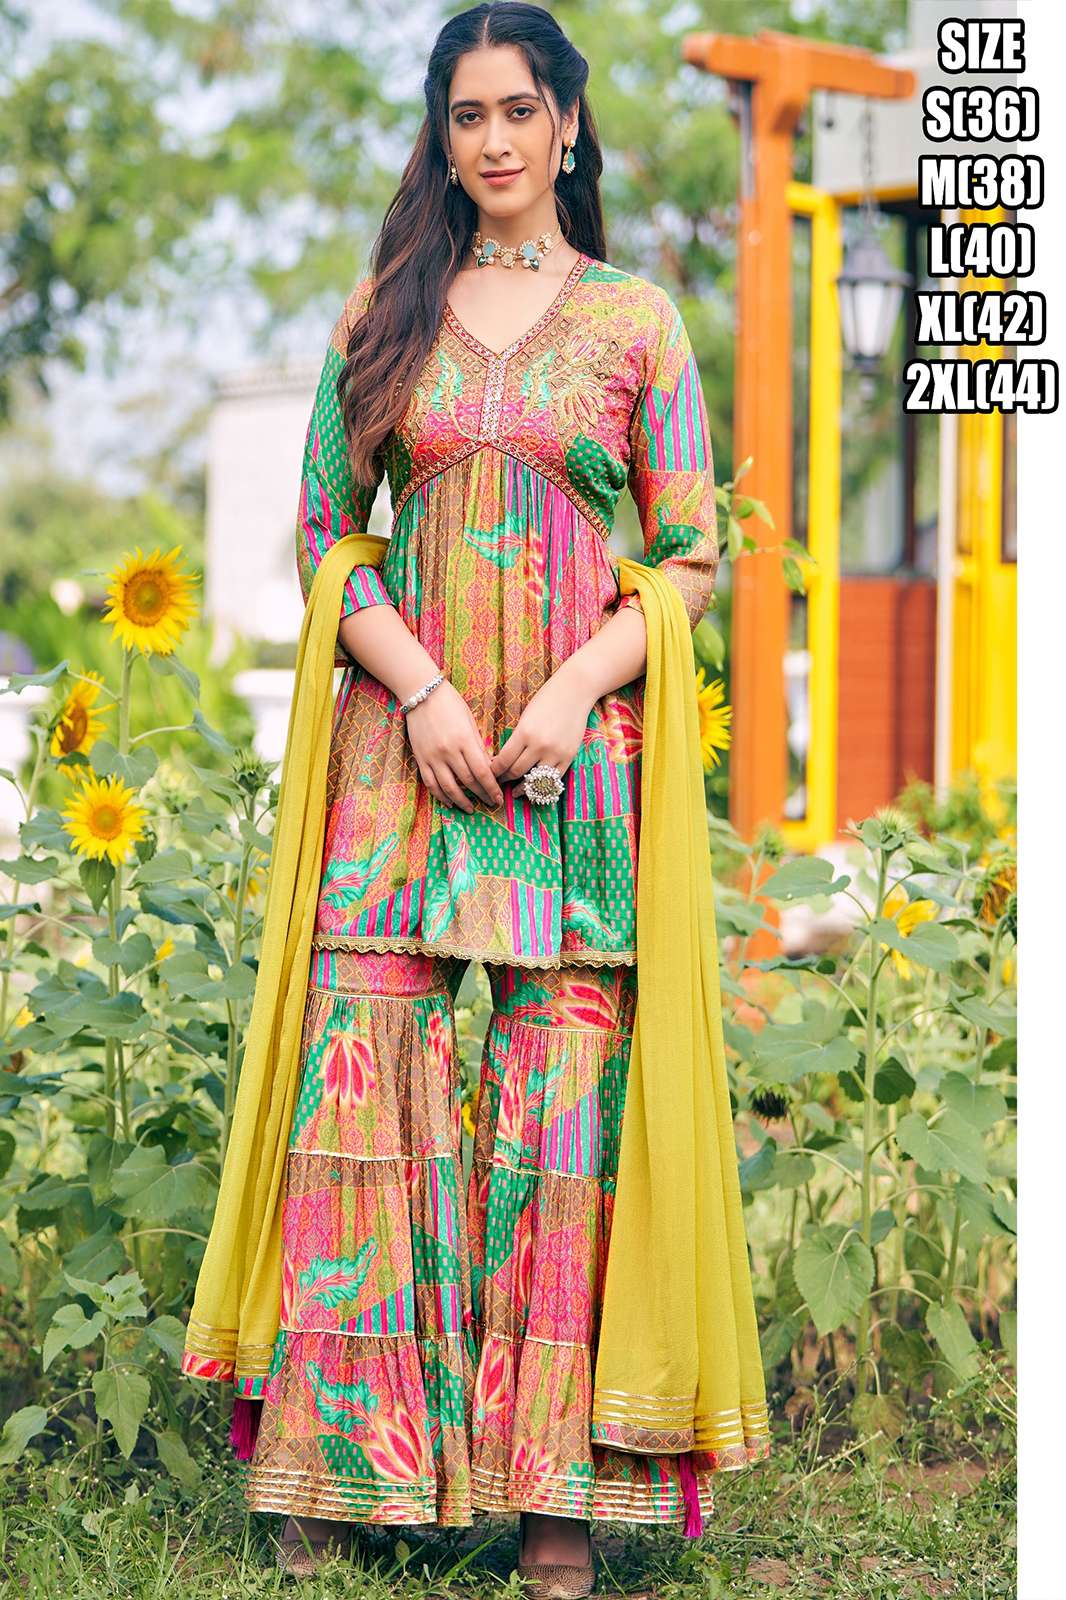 Shri Balaji Emporium 4148 Latest Party Wear Designer Short Frock With  Sharara Dress